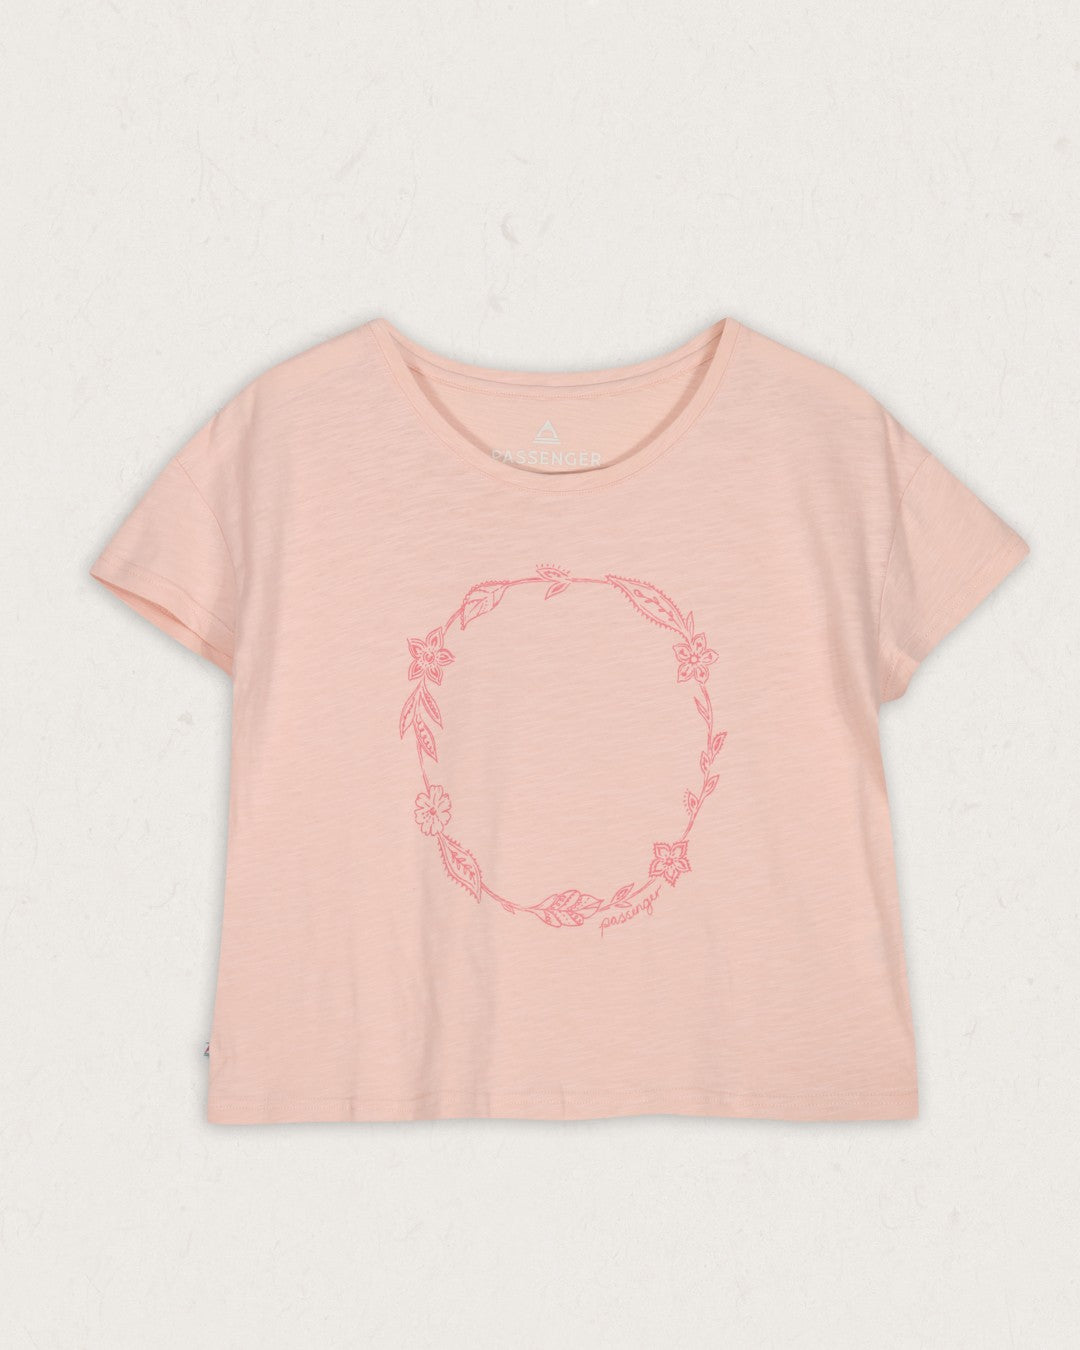 Daisy Chain Recycled Cotton T-Shirt - Peach Whip